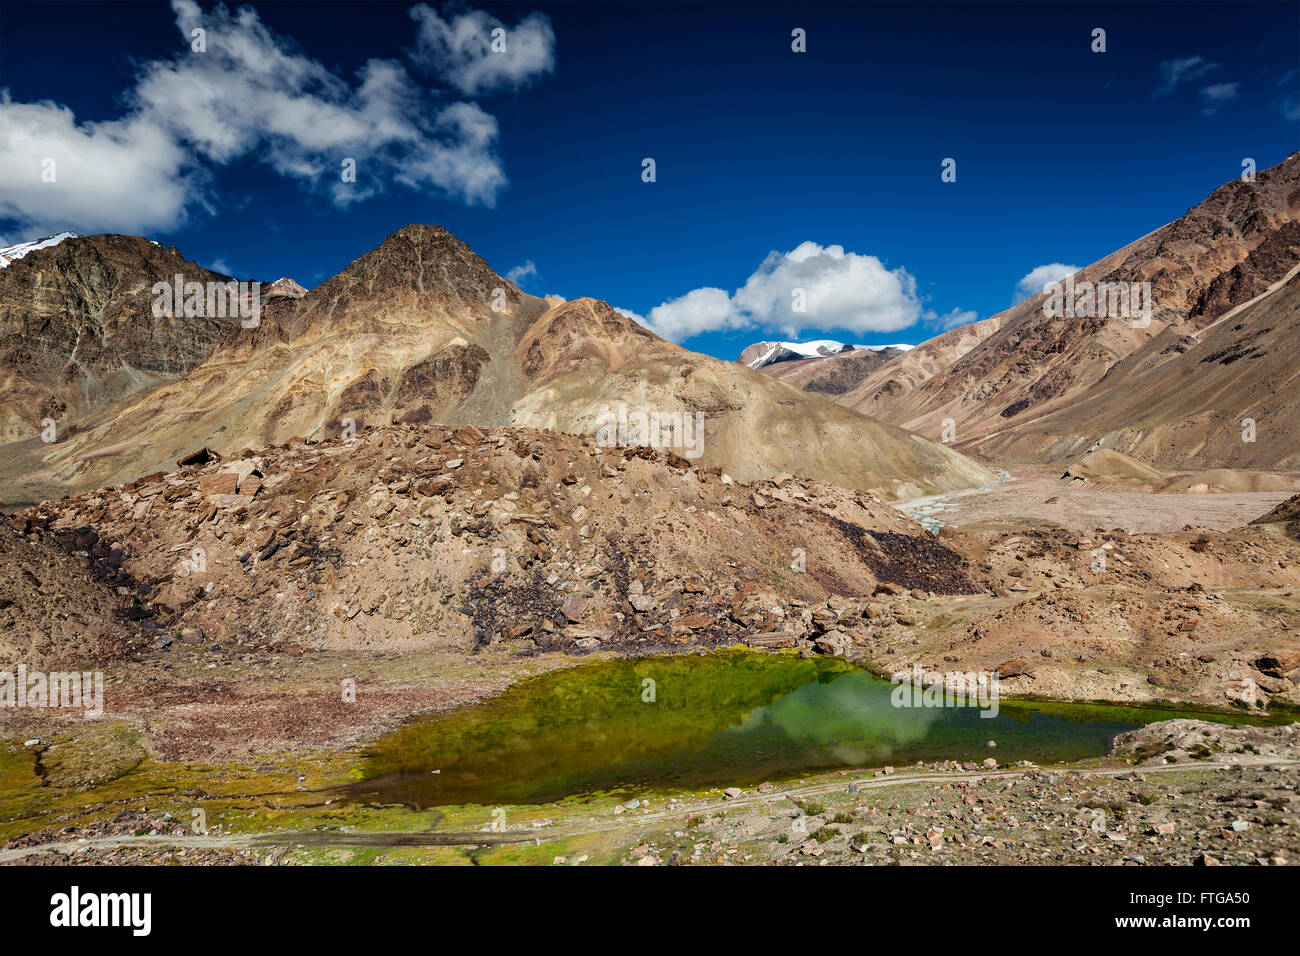 Himalayan landscape with mountain lake Stock Photo